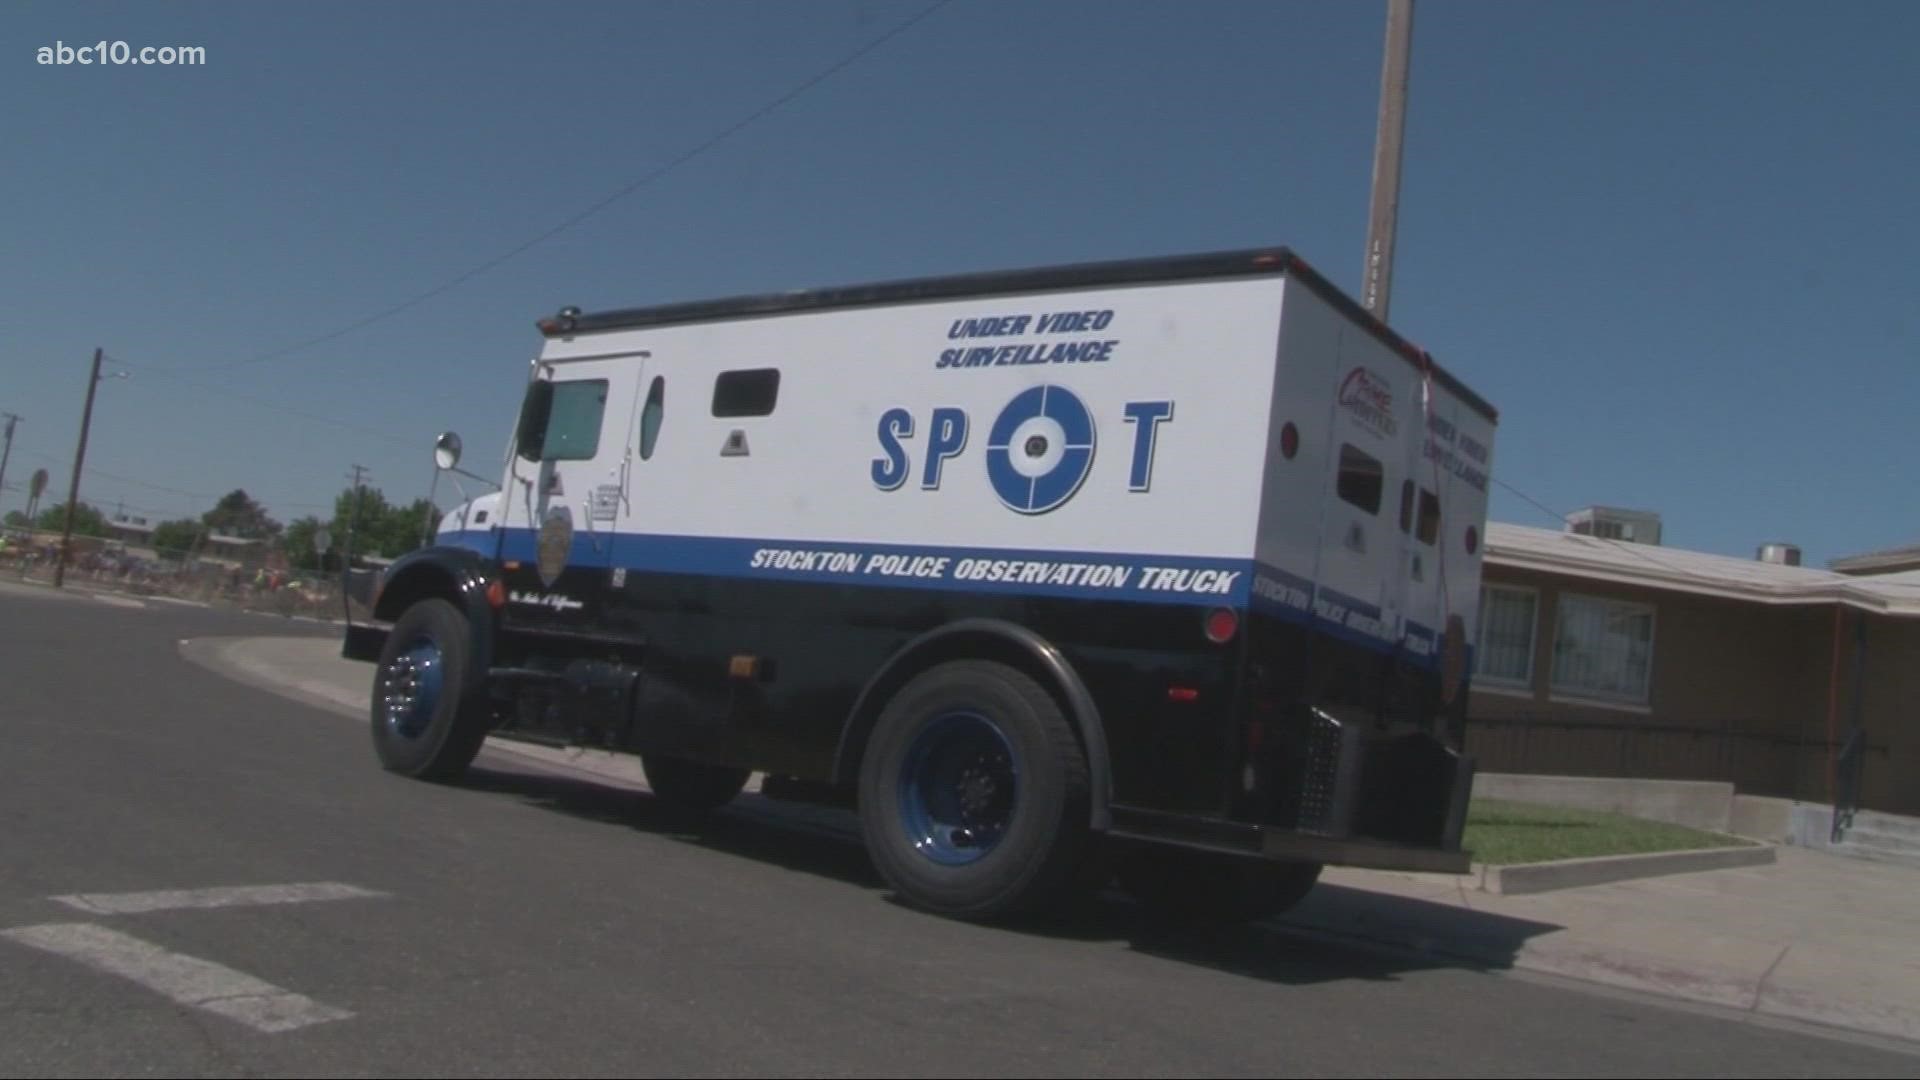 Stockton community members react to new police vehicle